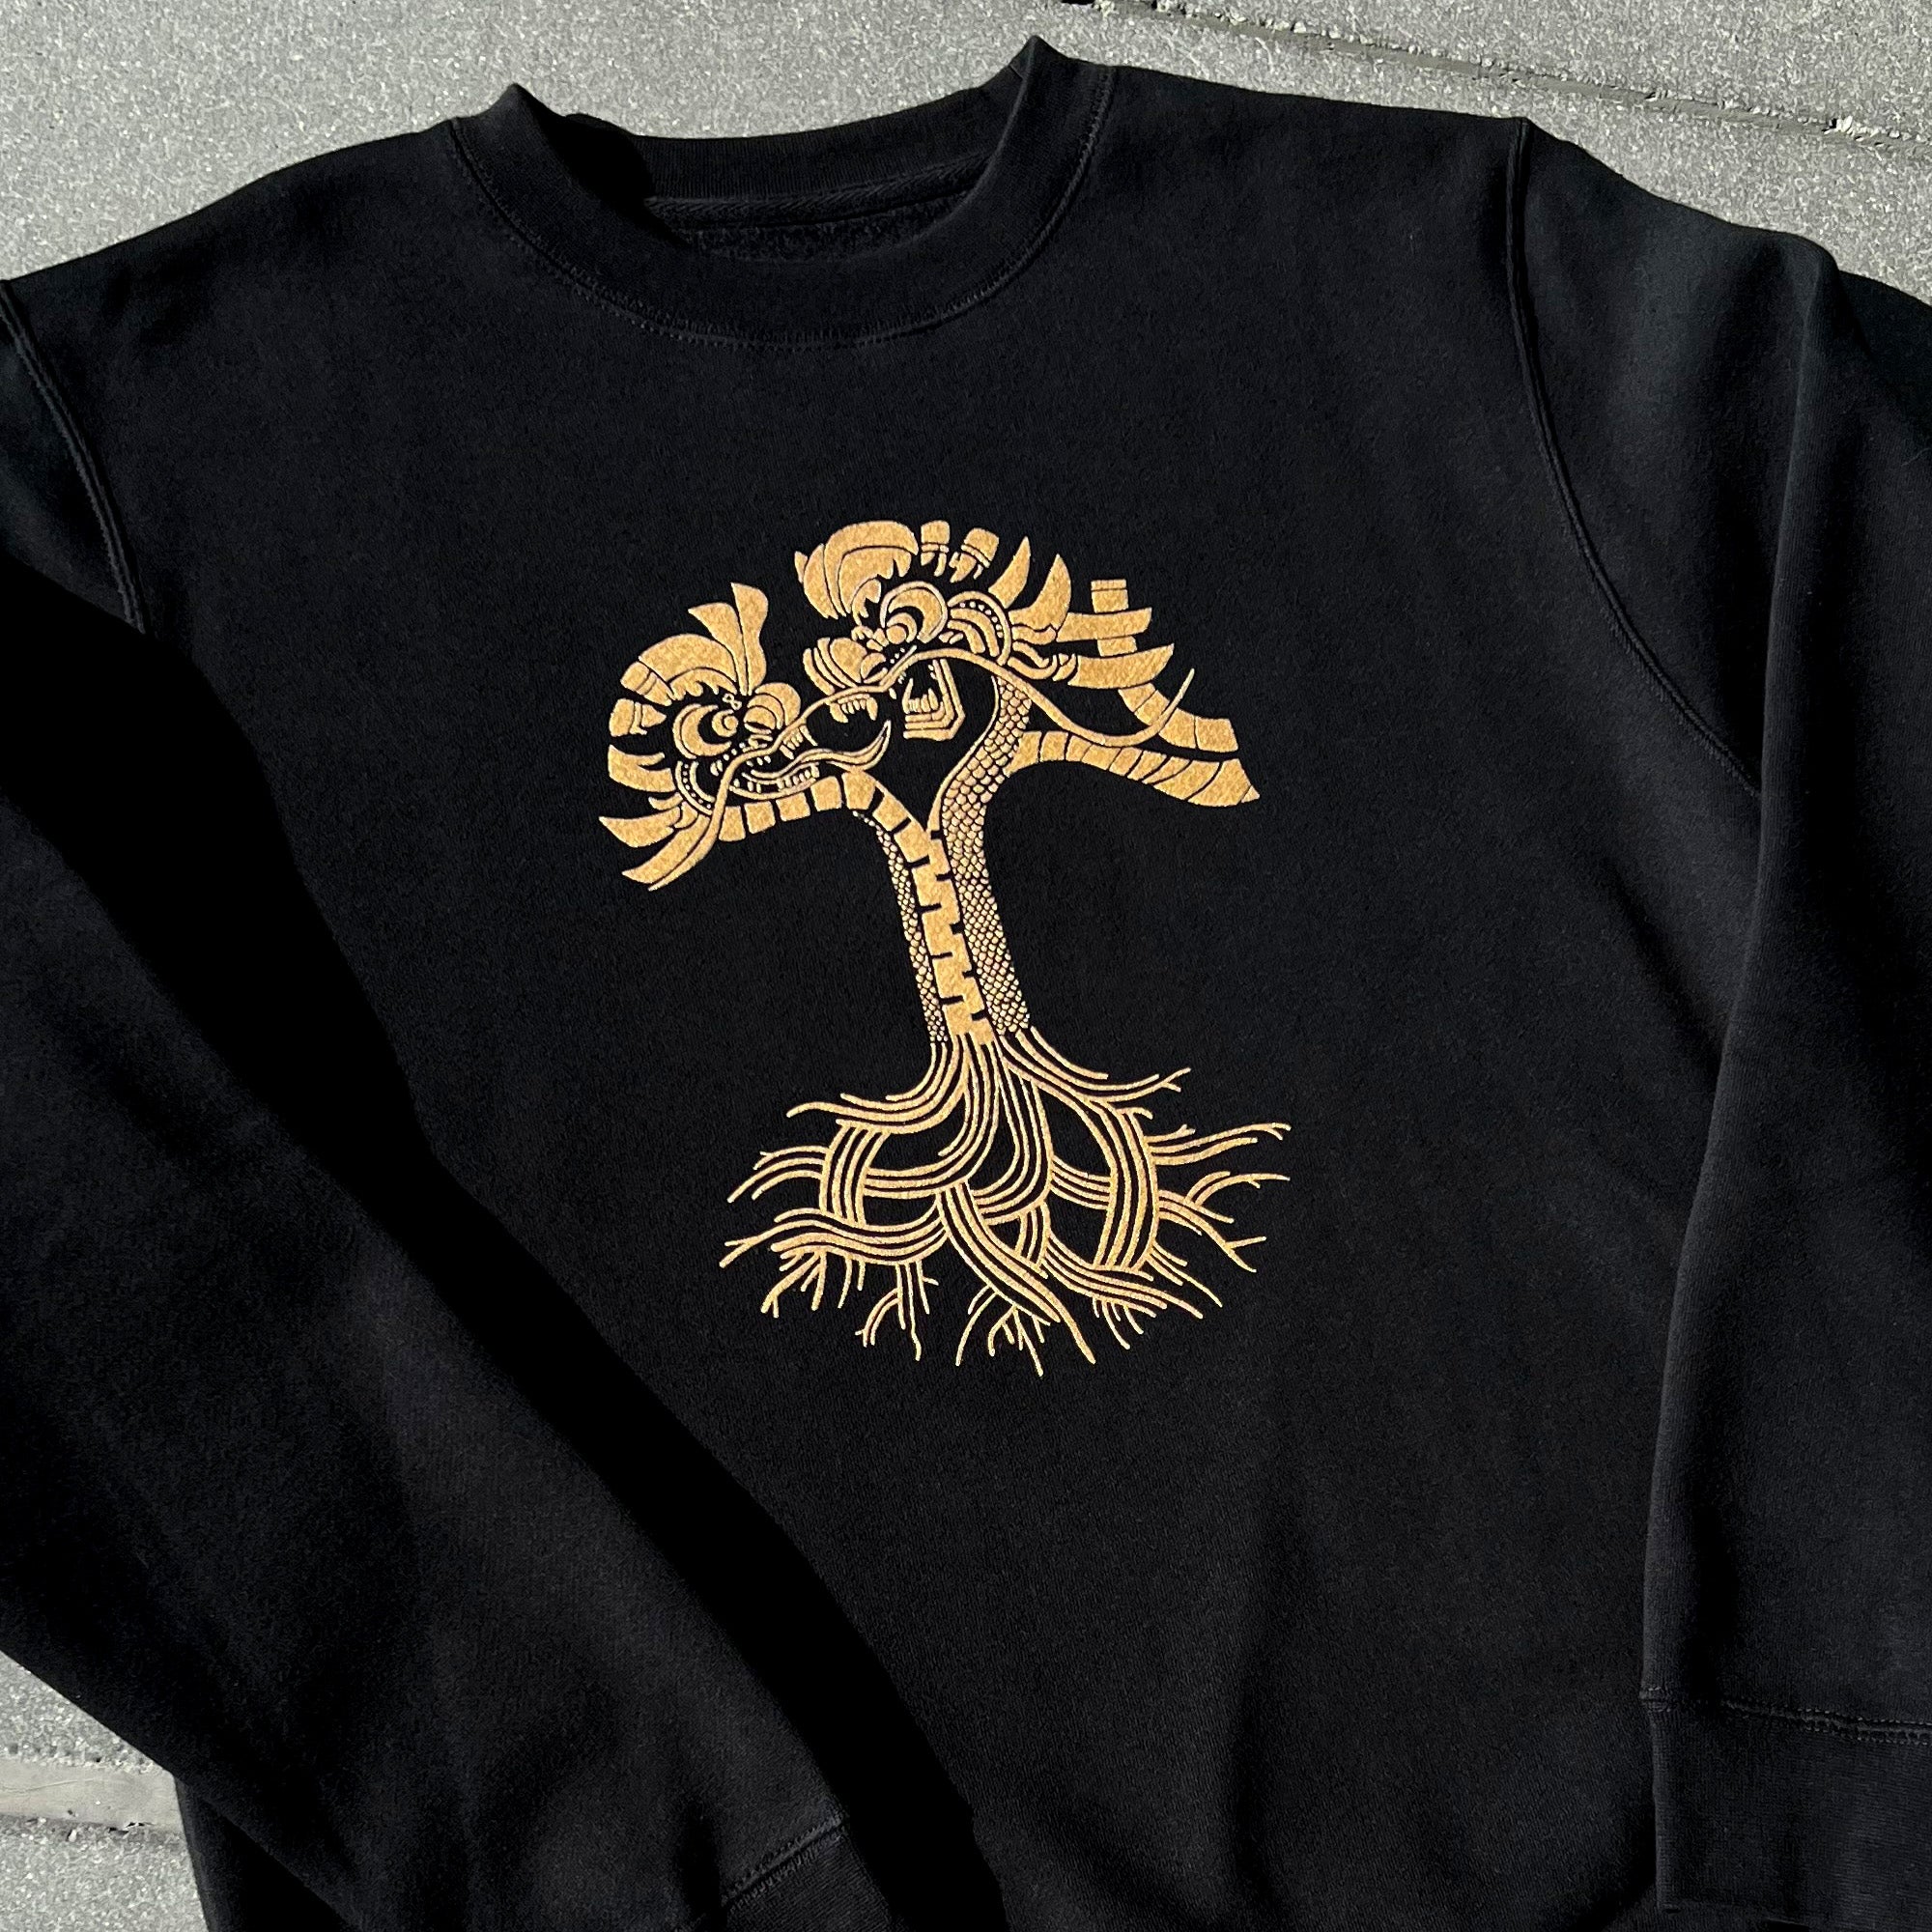 Black crewneck sweatshirt with metallic gold dragon power design in the shape of the Oaklandish tree logo outdoors on asphalt.